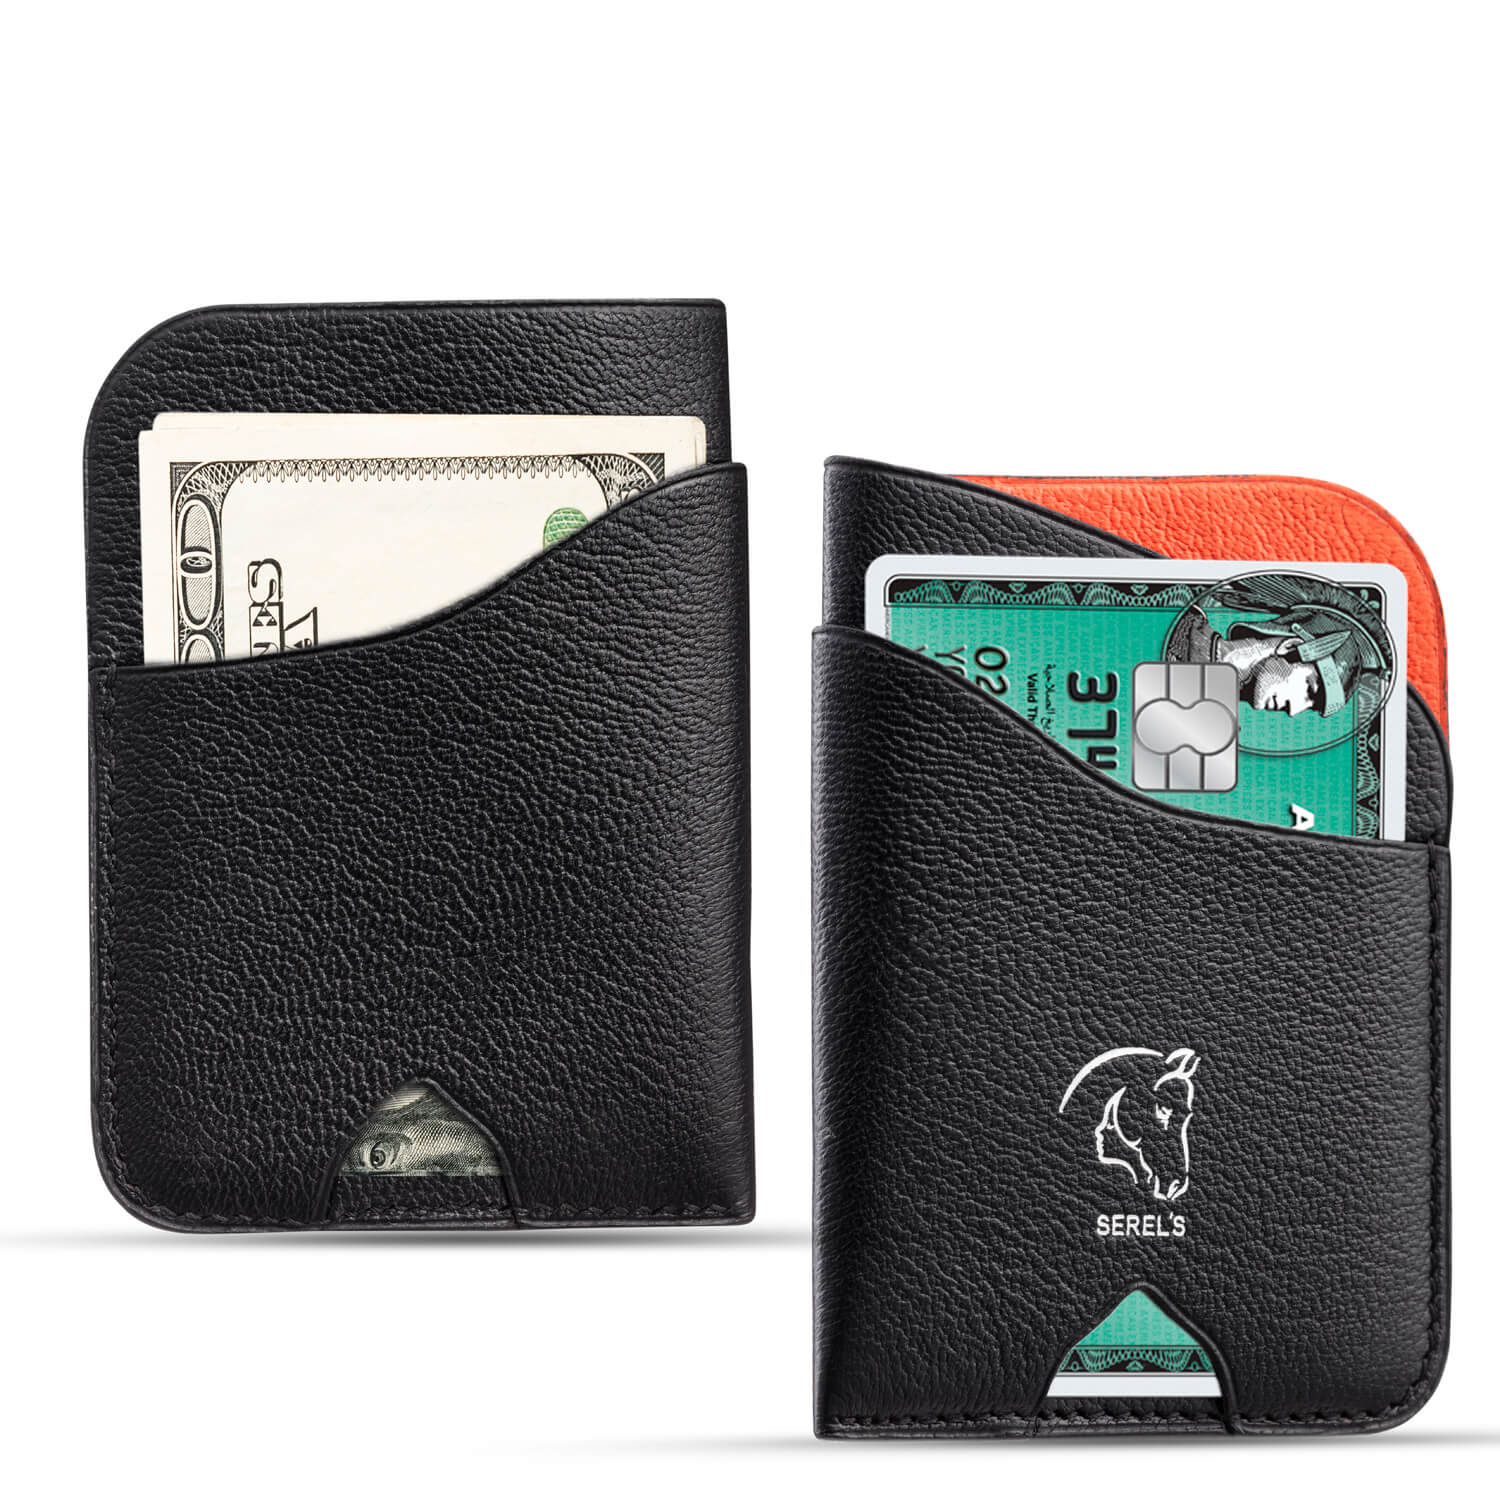 Serel's Smart Wallet detail